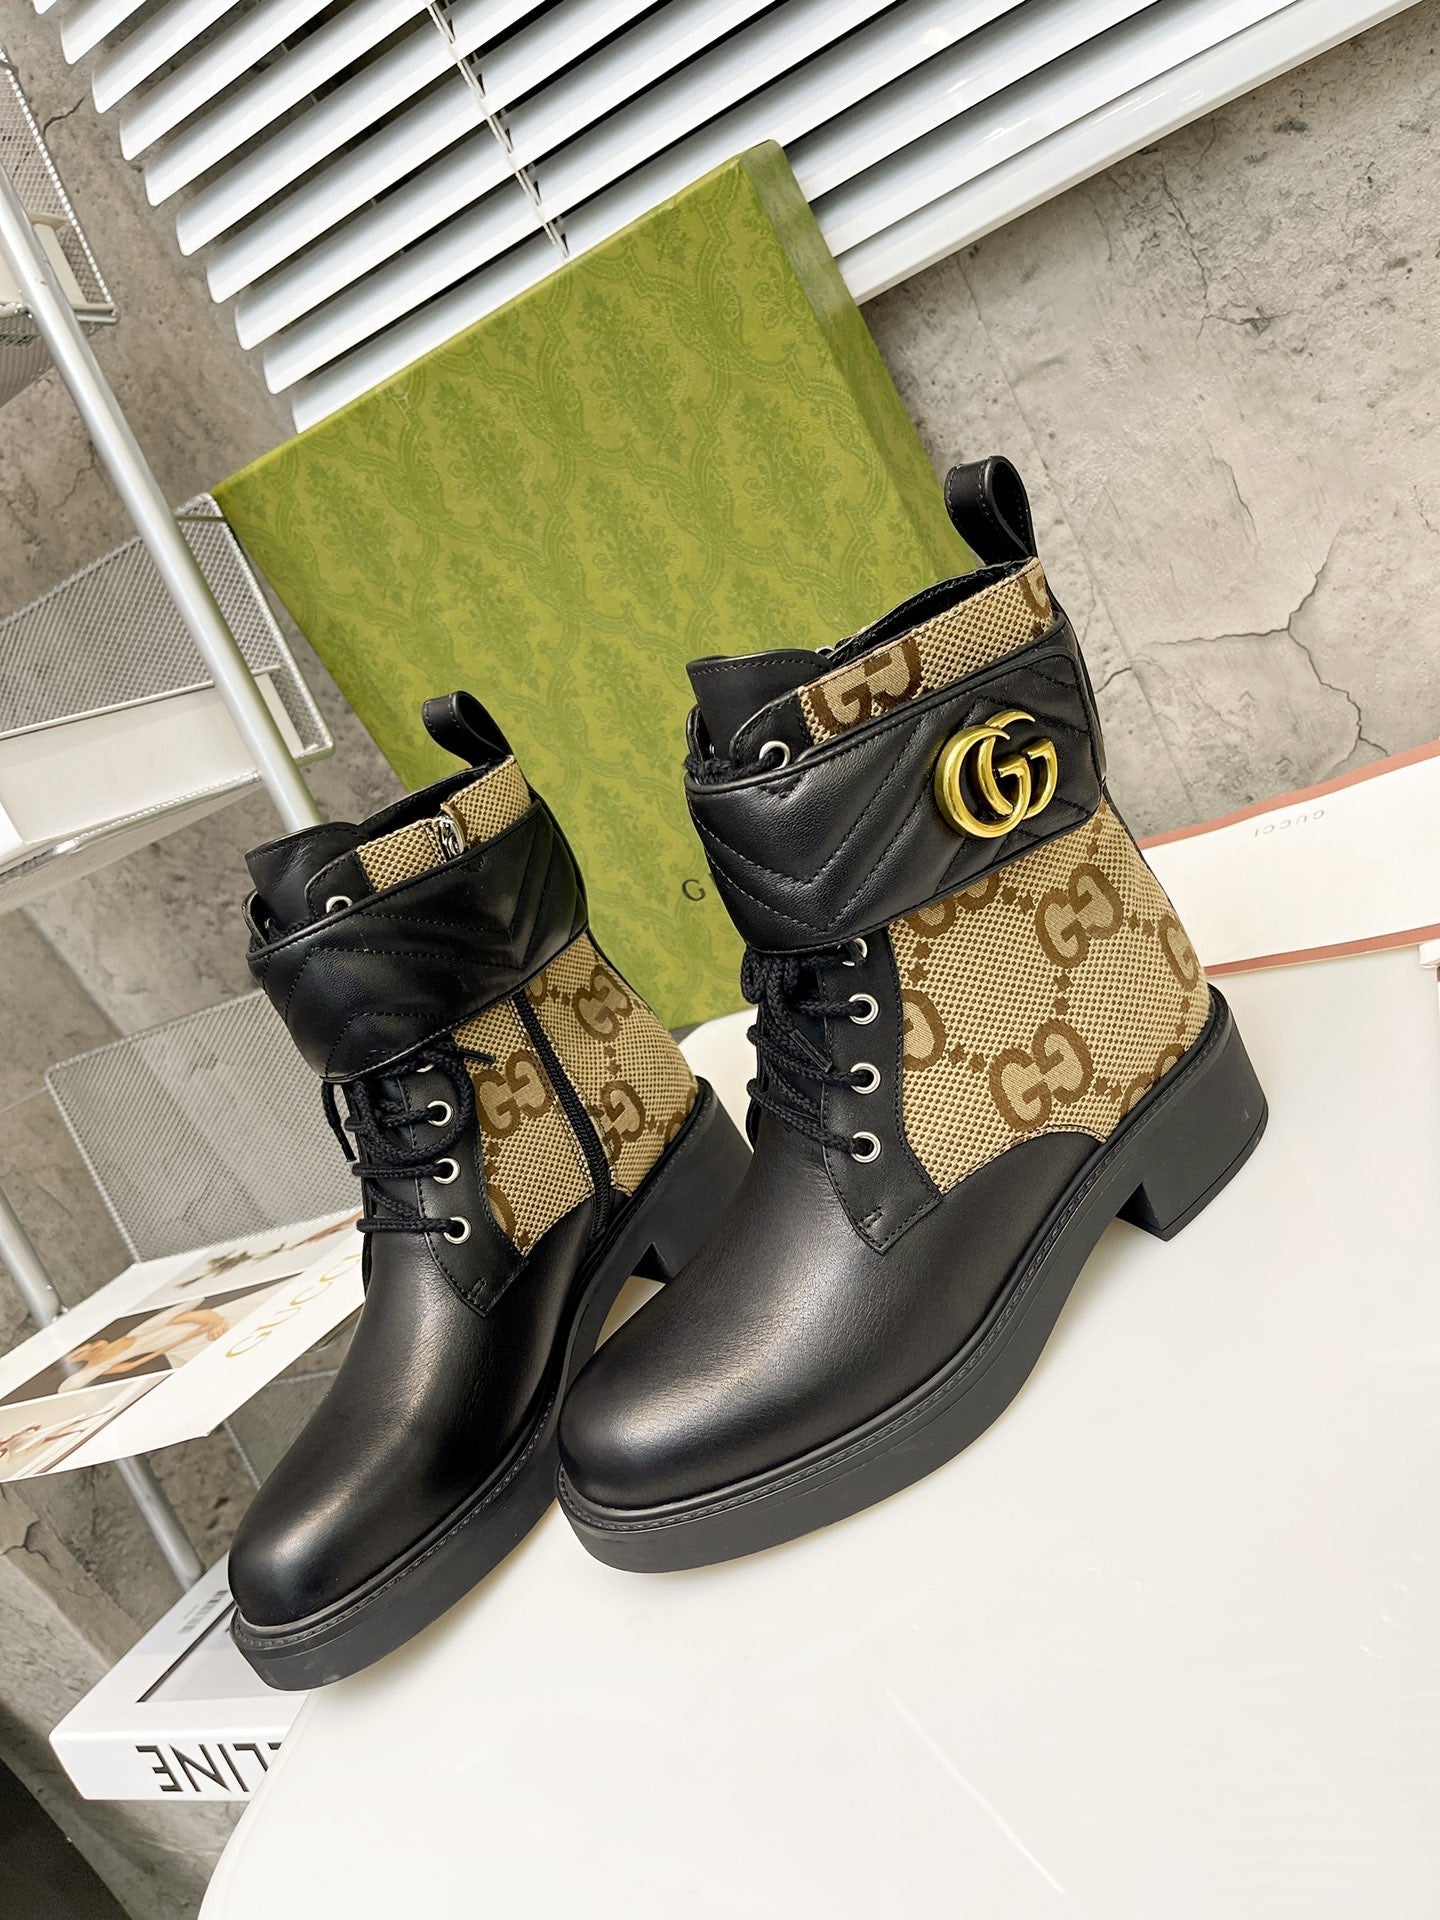 gg women boot new styles ~